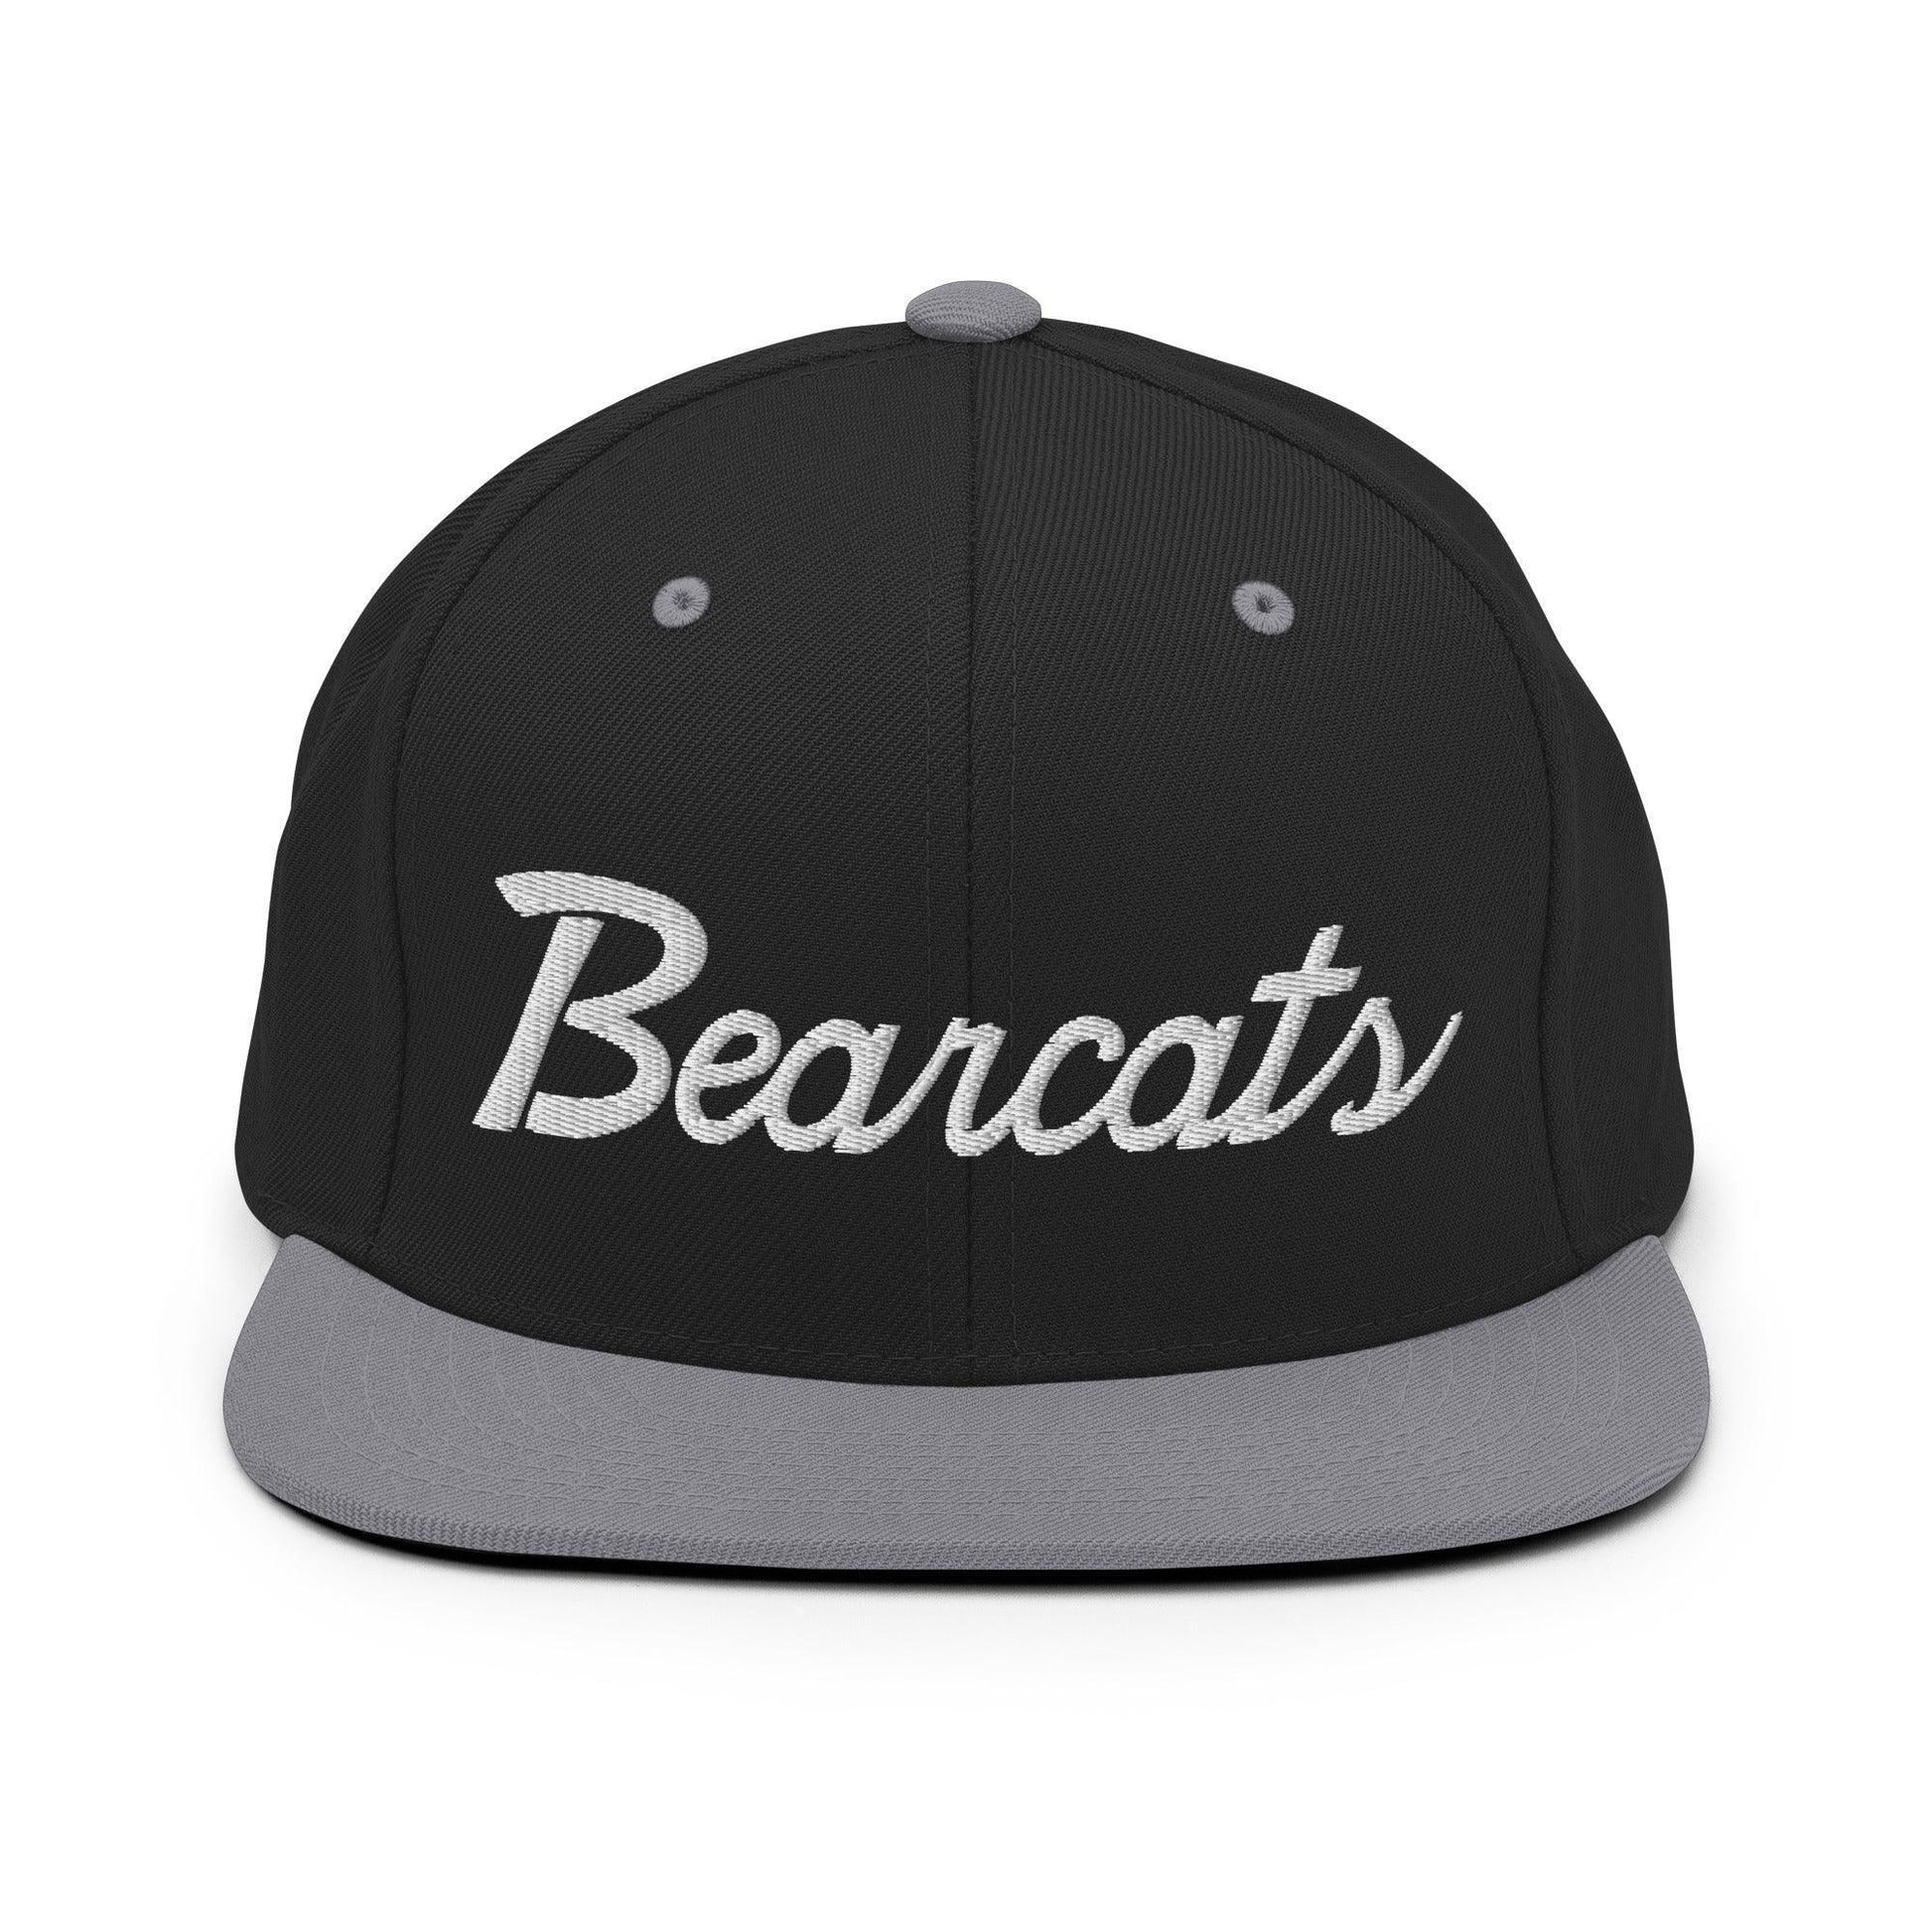 Bearcats School Mascot Script Snapback Hat Black/ Silver